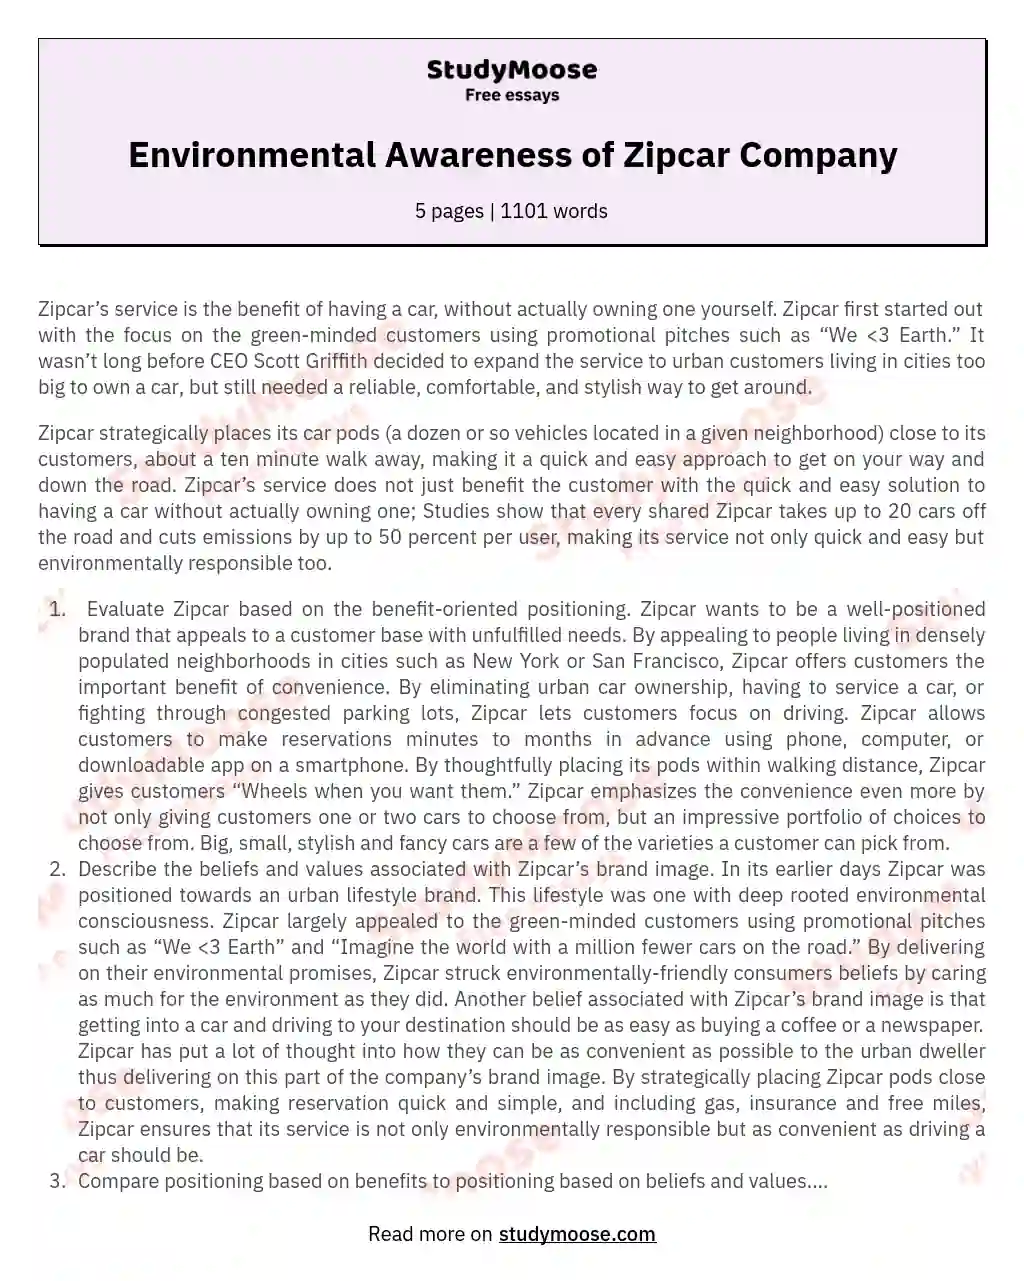 Environmental Awareness of Zipcar Company essay